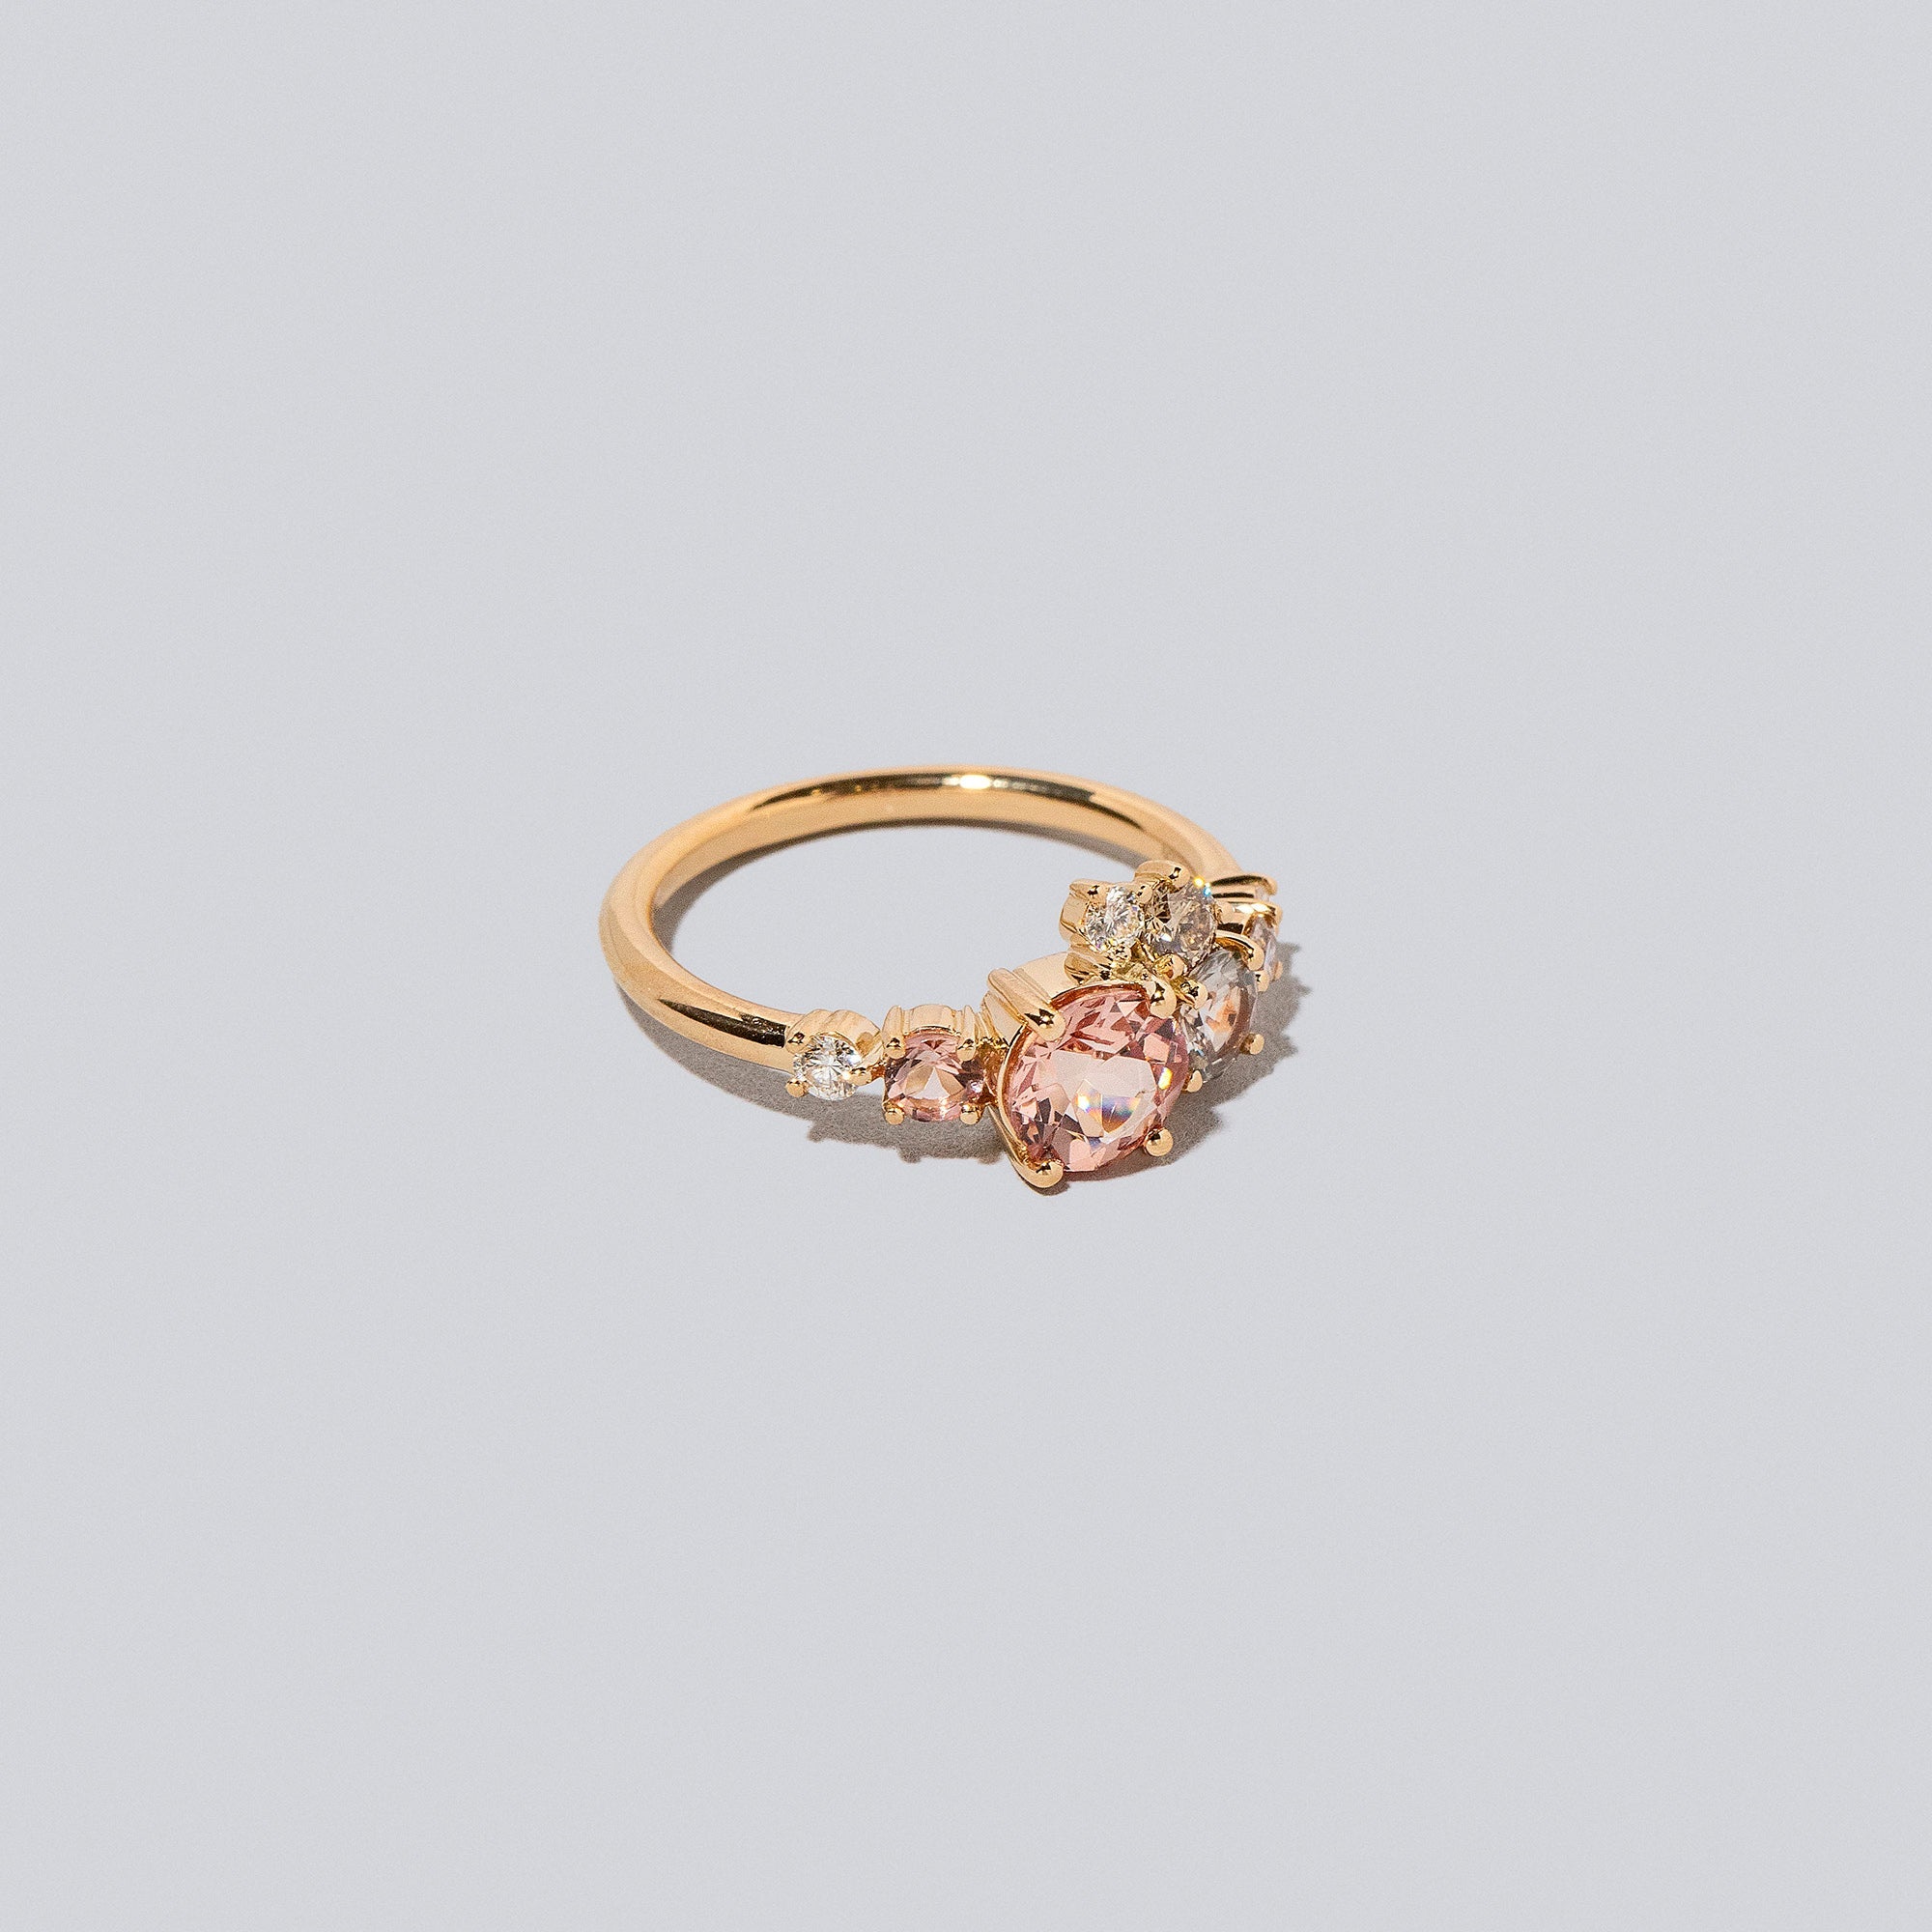 product_details::Lotus Garnet Luna Ring on light colored background.